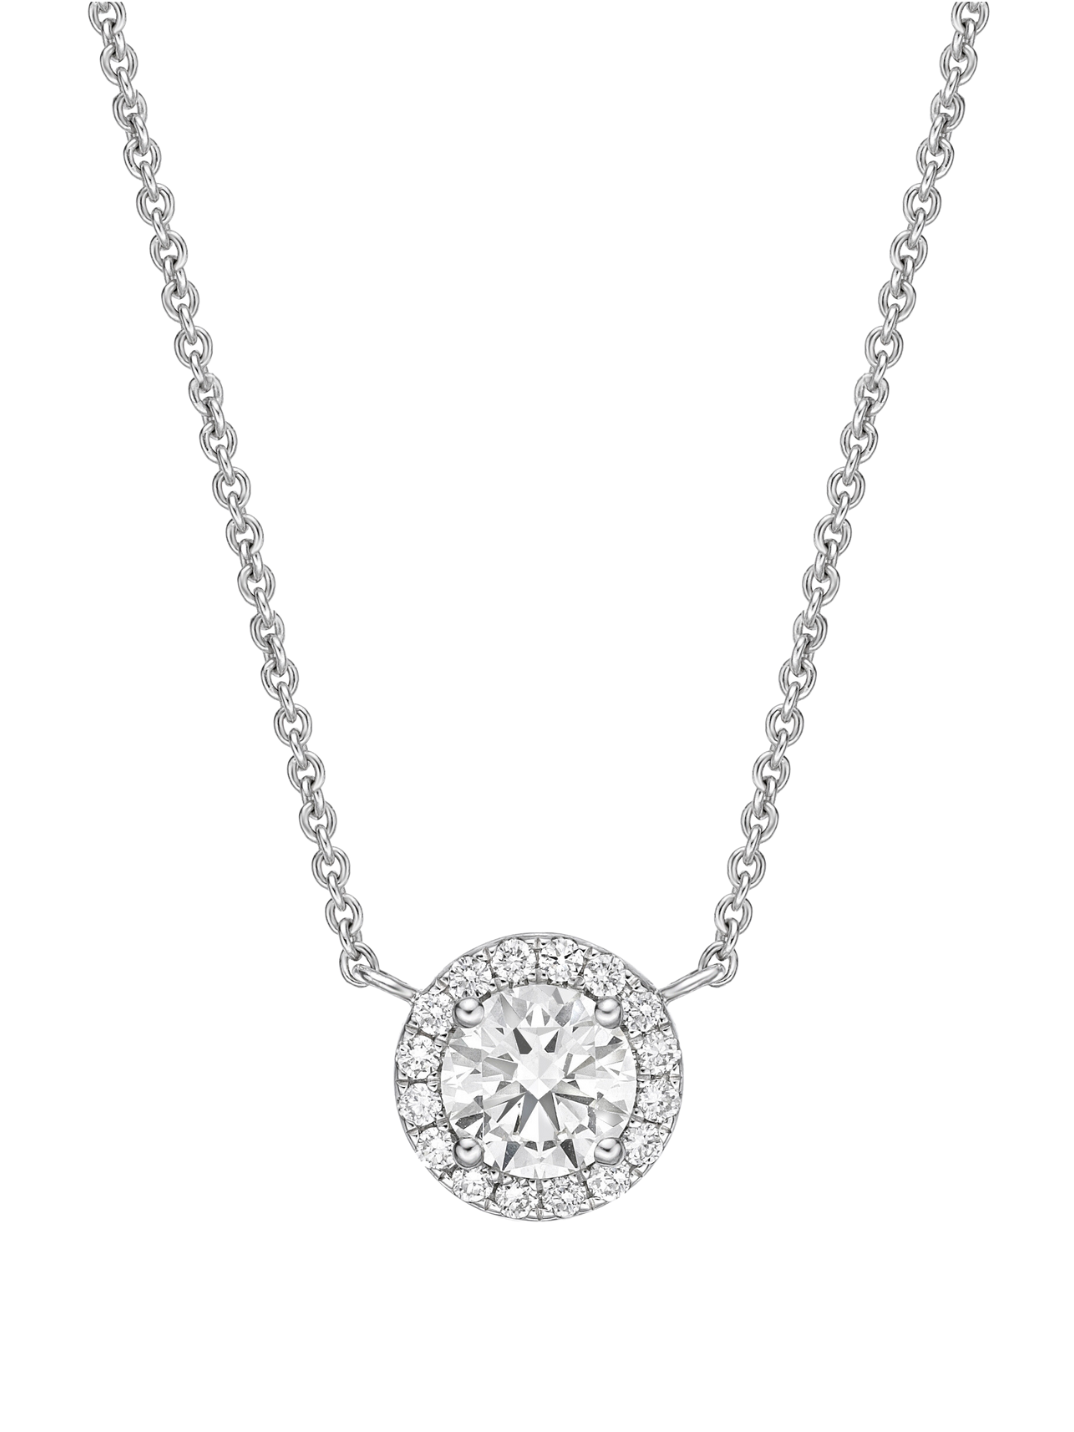 four prong halo pendant women's jewelry diamond necklace